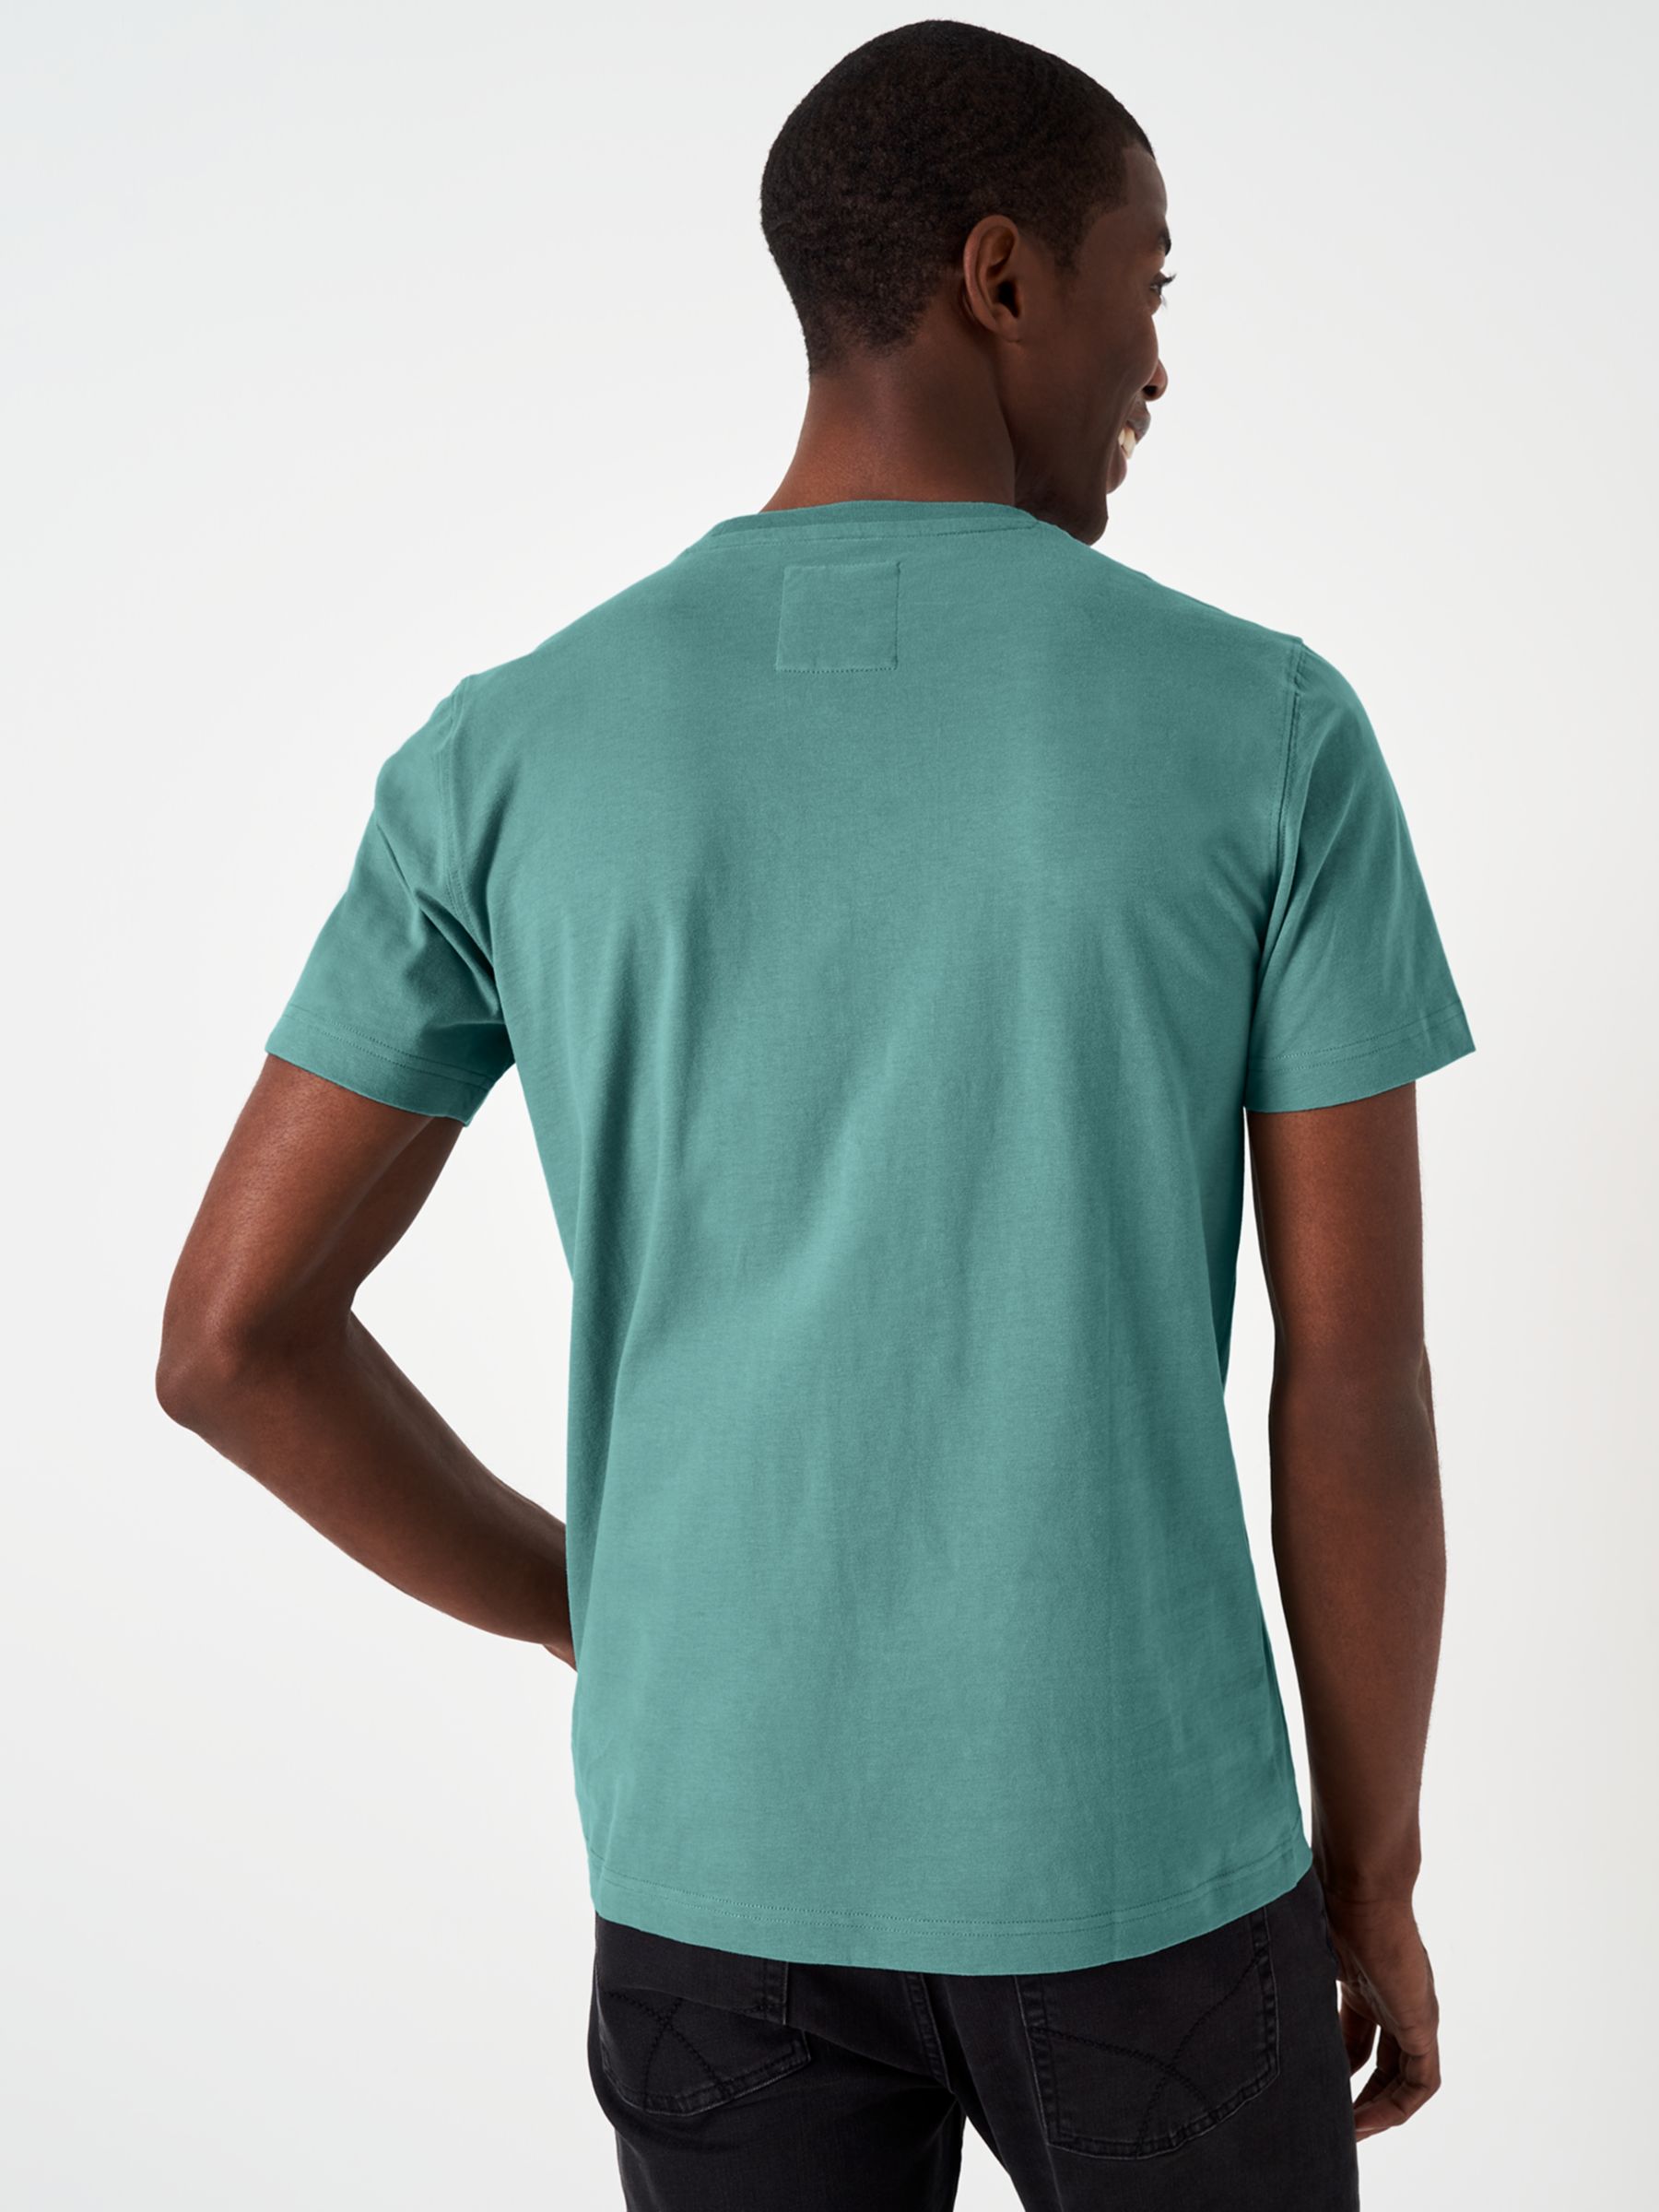 Crew Clothing Crew Neck T-Shirt, Light Green at John Lewis & Partners